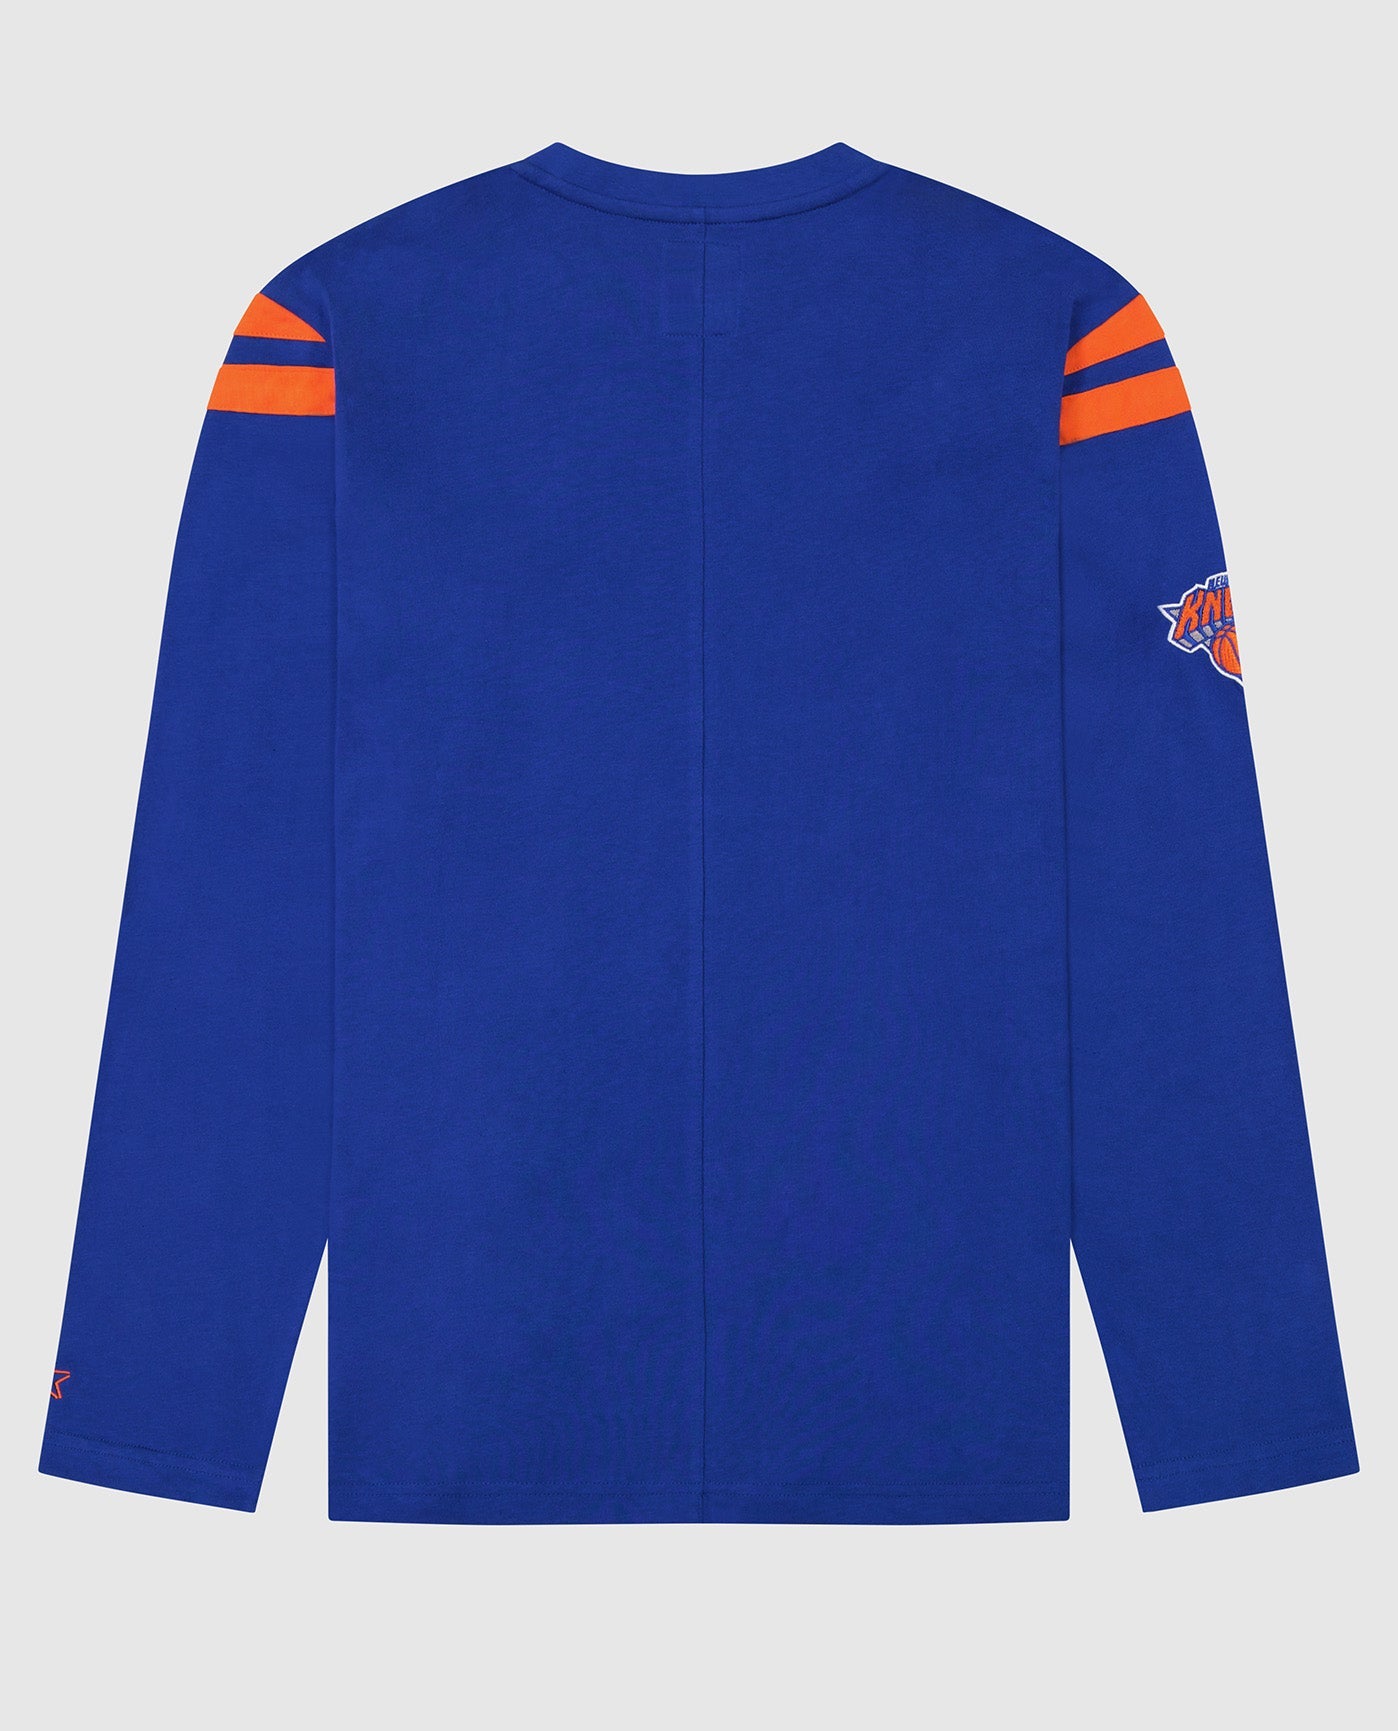 Back of New York Knicks Elite Long Sleeve Shirt | Knicks Blue